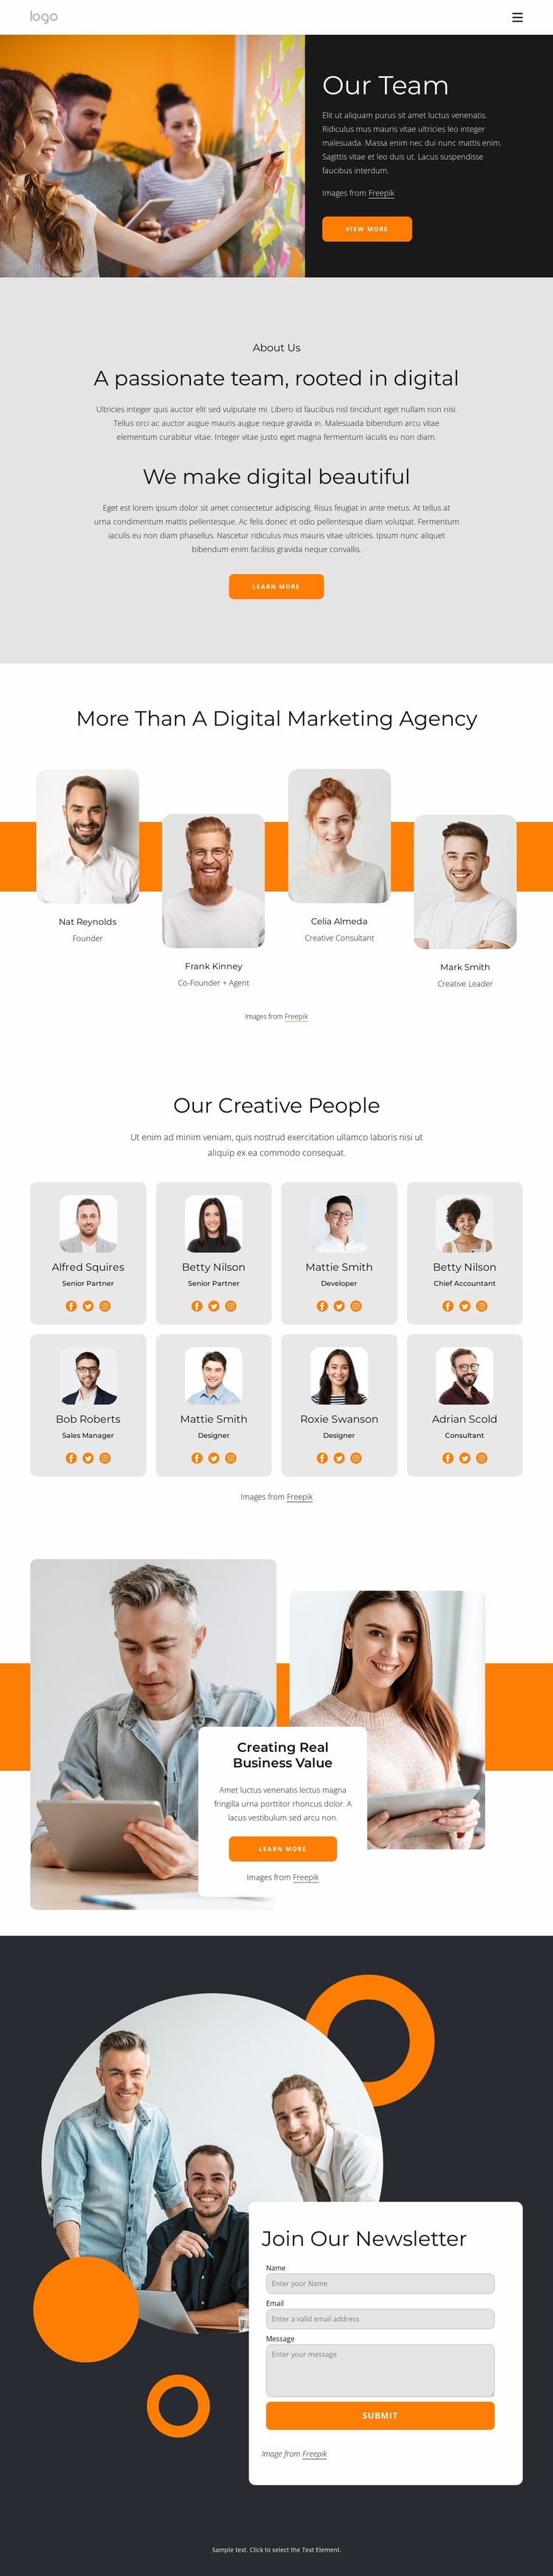 We are creative people with big dreams Website Mockup